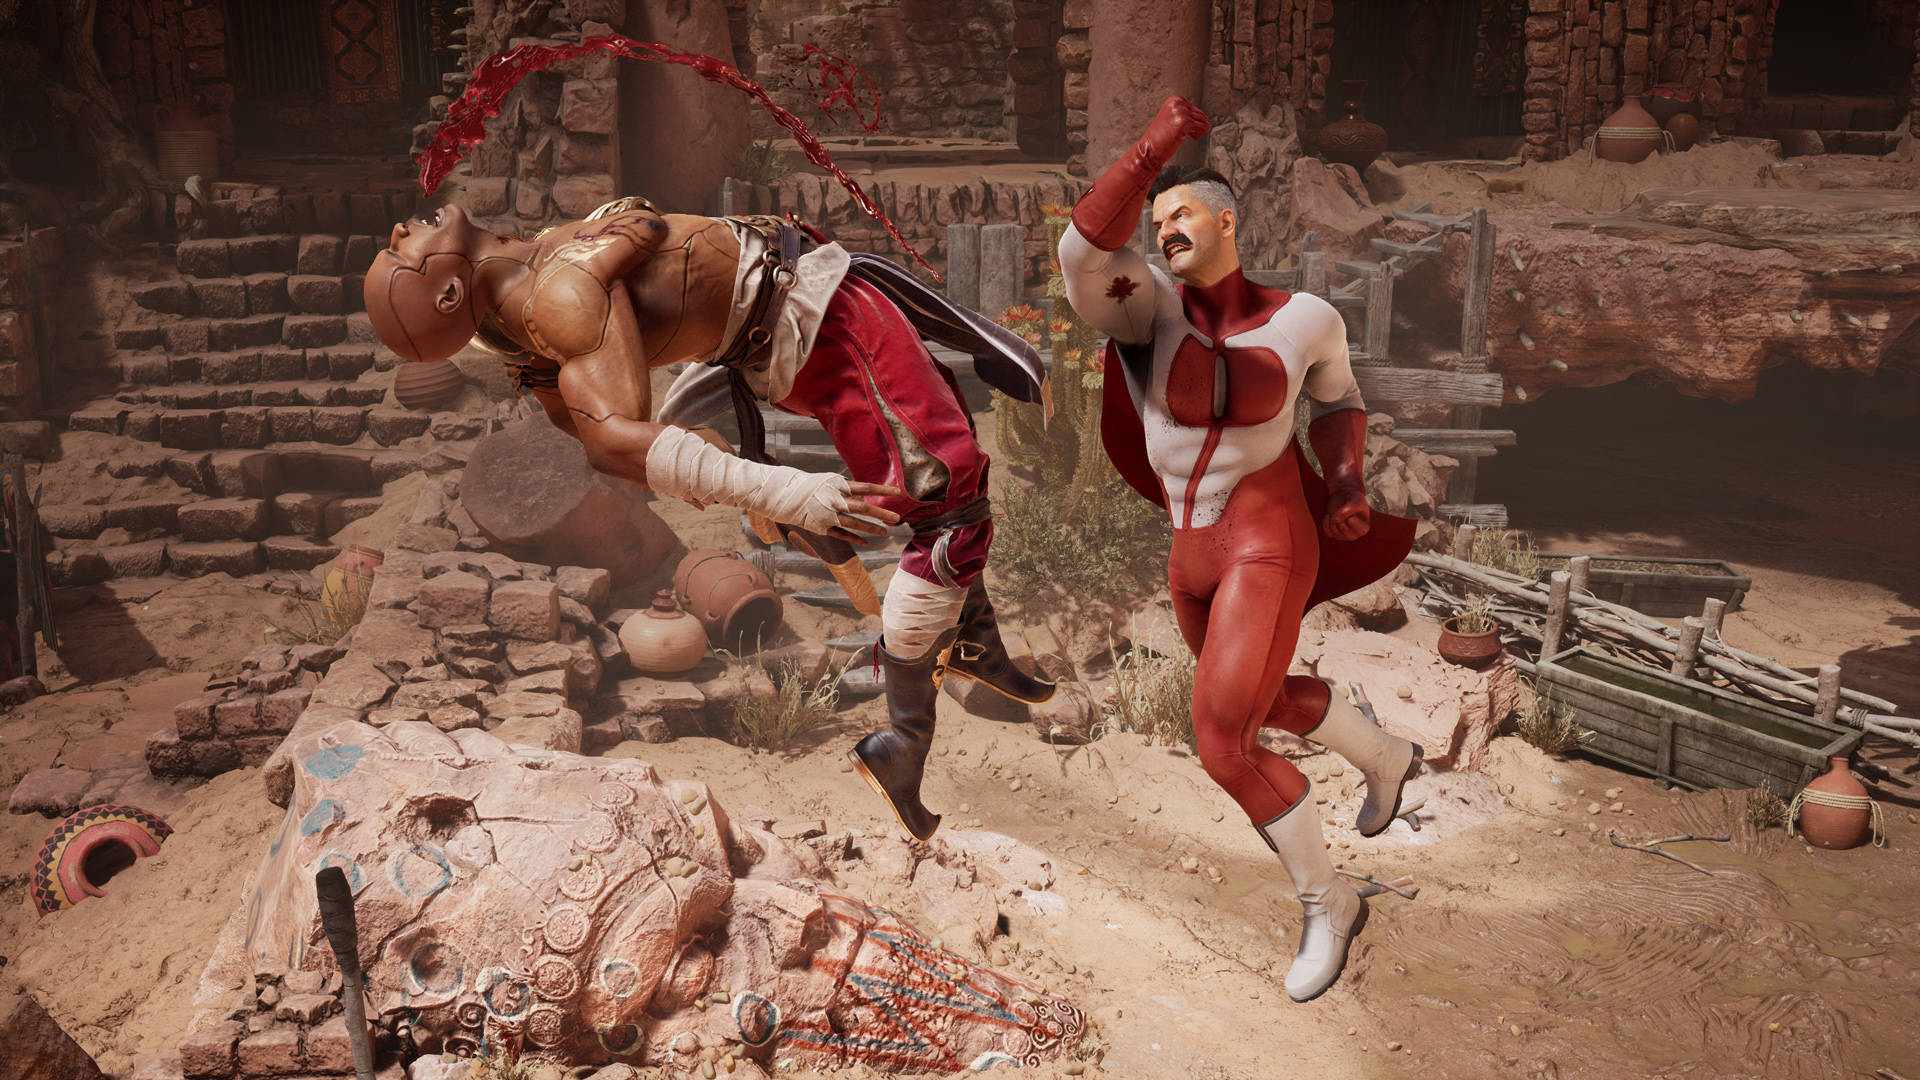 Mortal Kombat 1 Omni-Man Early Access Release Date Confirmed via Xbox Store